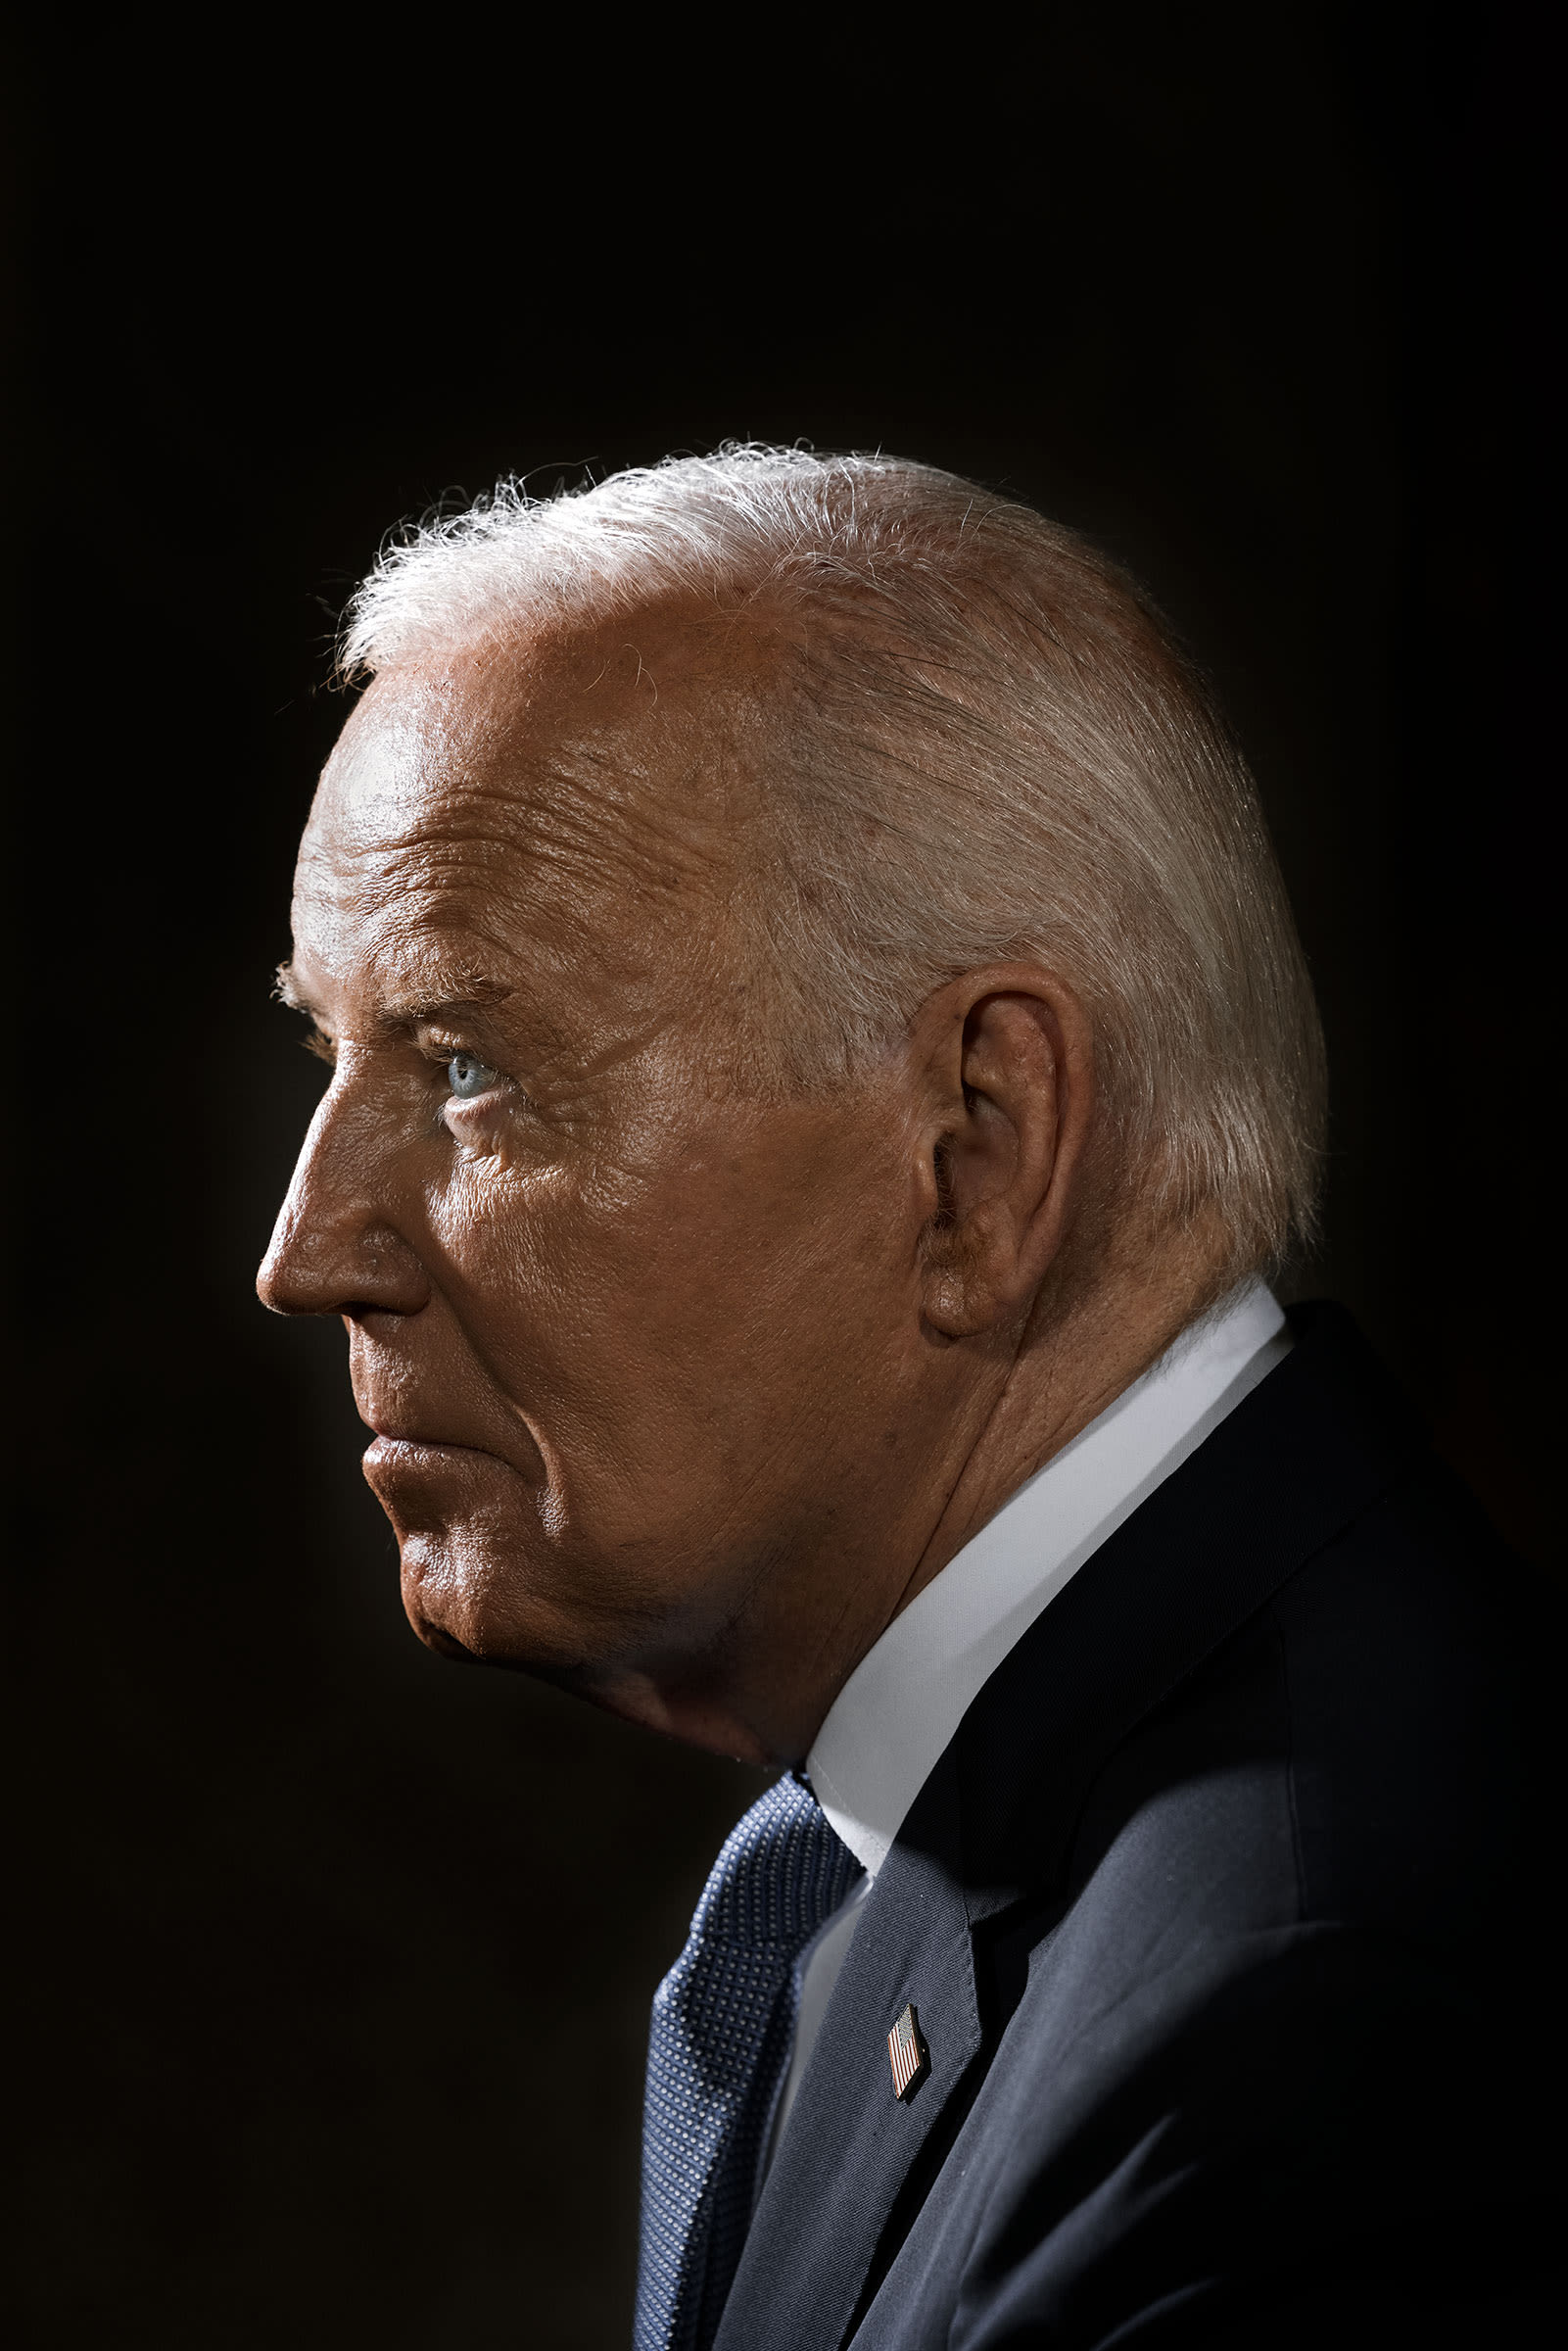 President Biden on World Leadership, War, and 2024 Election